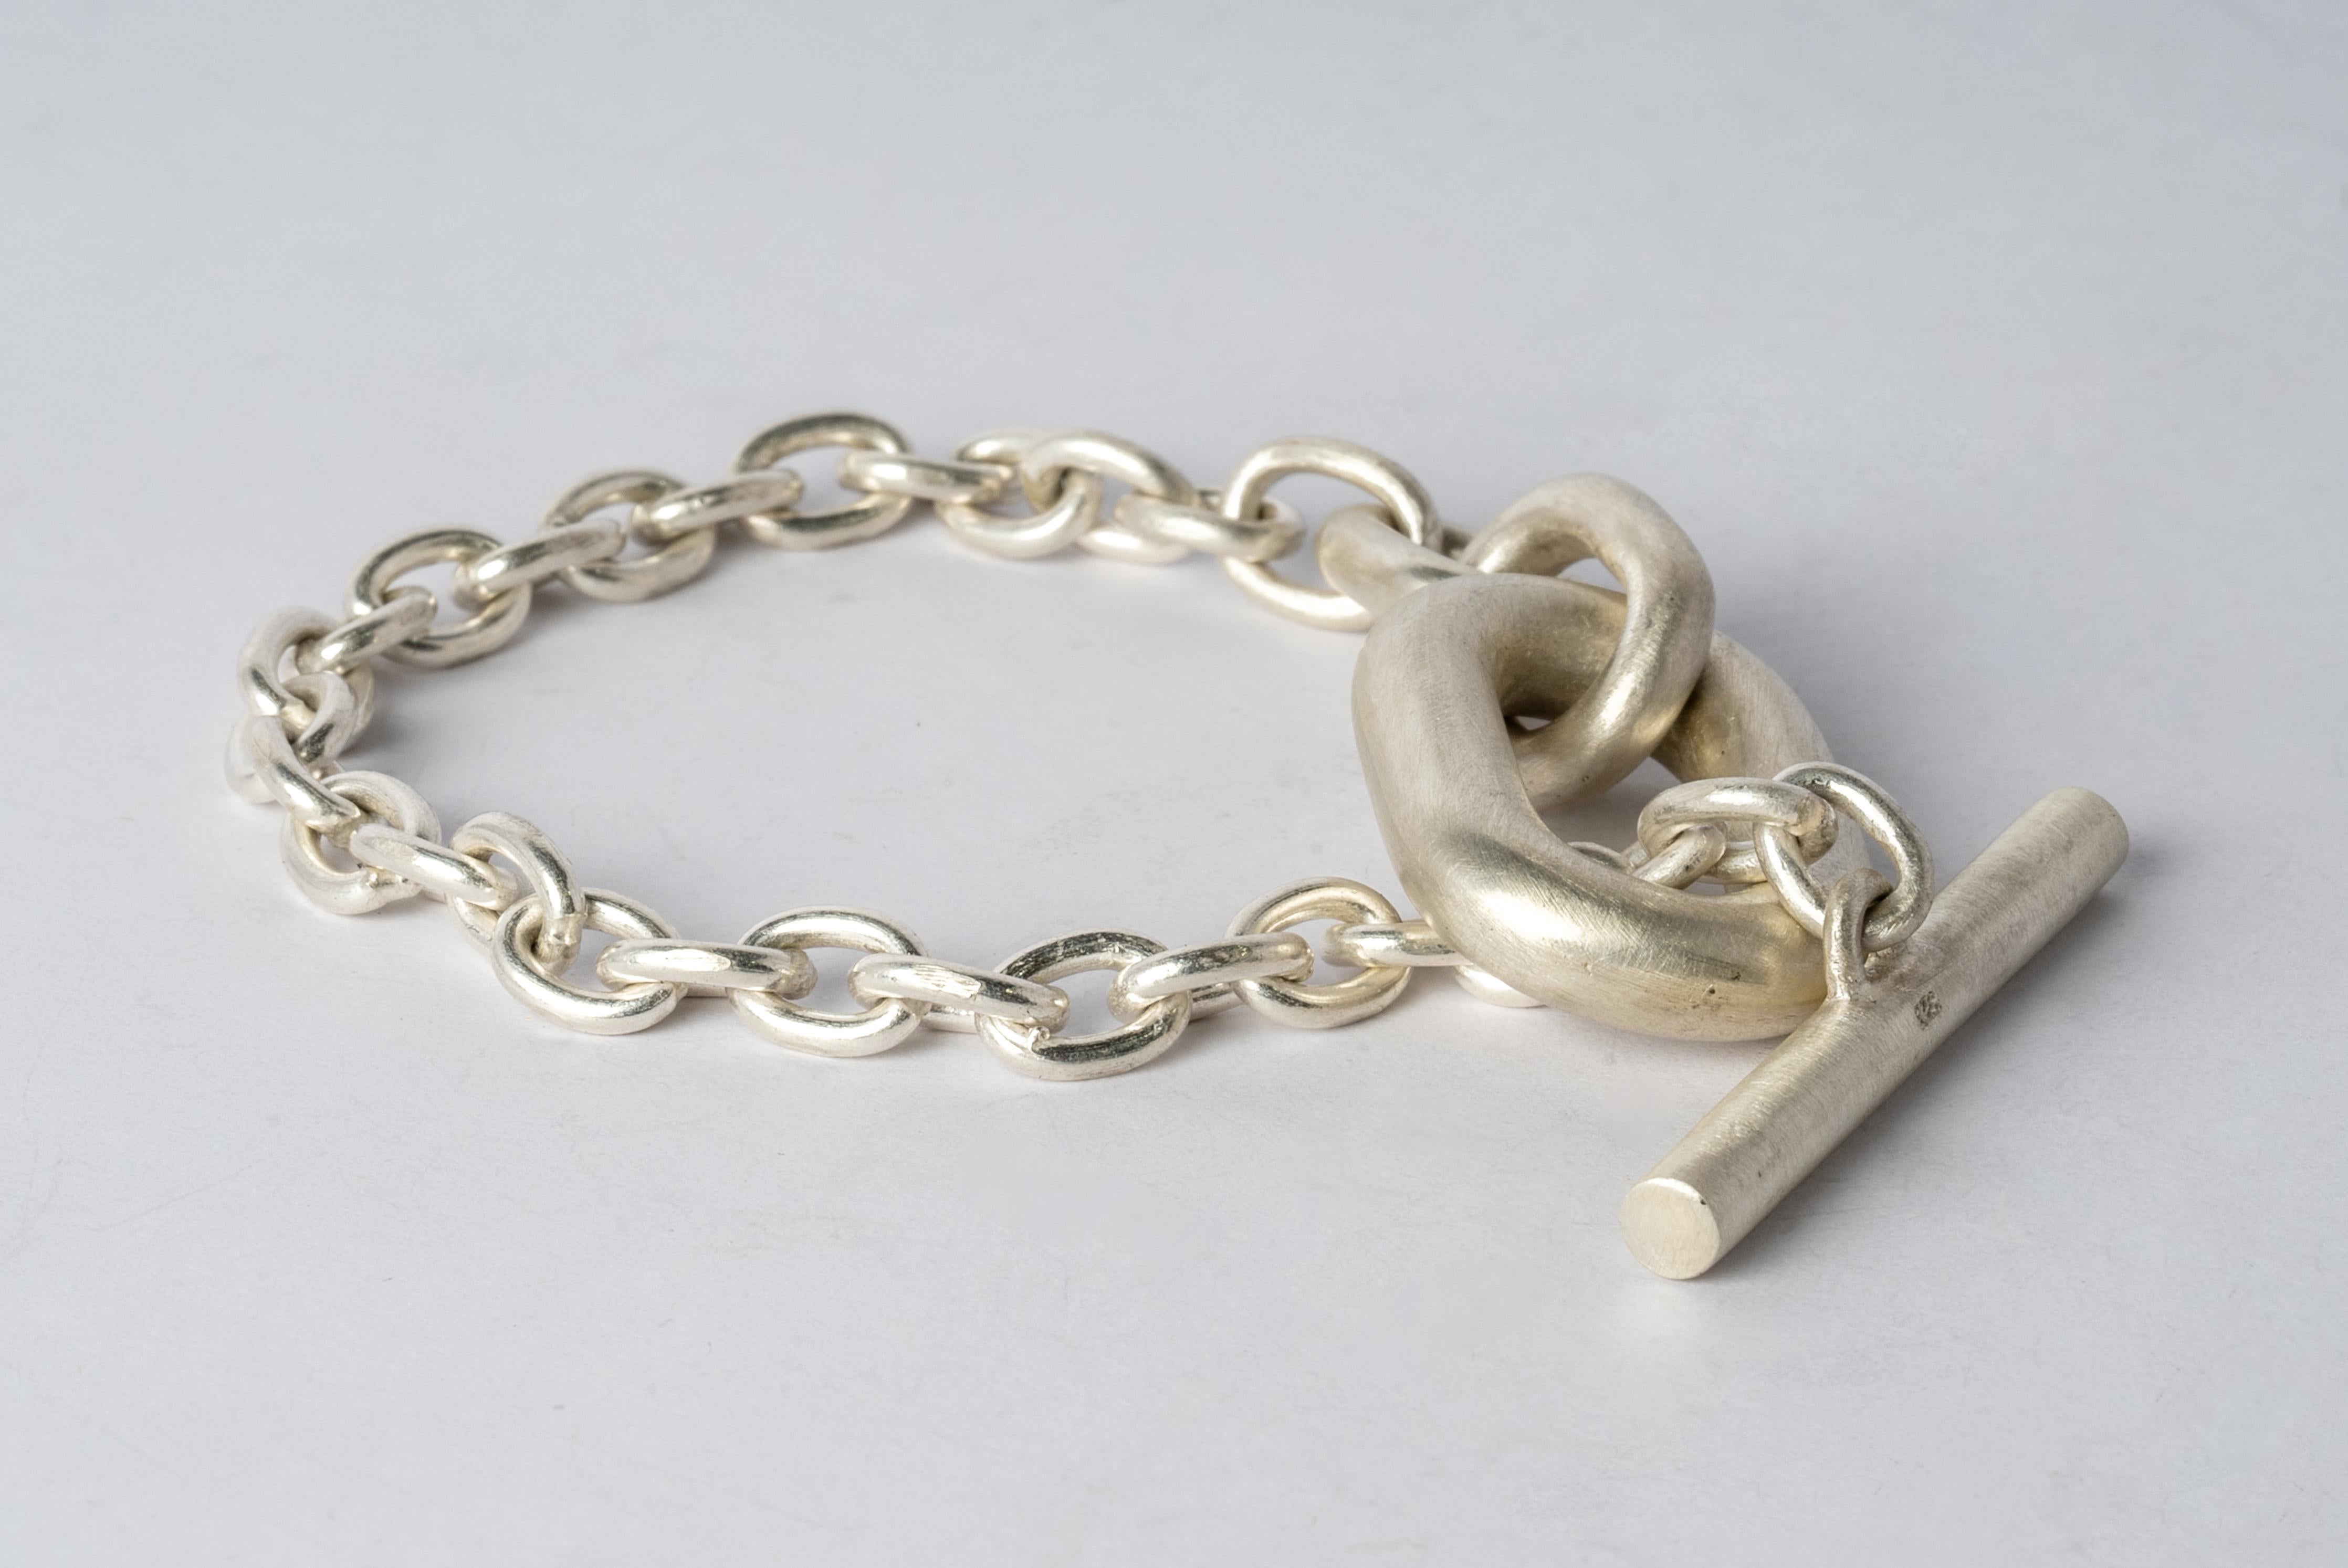 Bracelet in matte sterling silver, sanded at 230 grit.
Dimensions: Toggle length: 40 mm
Toggle link size (L × H): 33 mm × 22 mm
Chain size (L × H): 6 mm × 9 mm